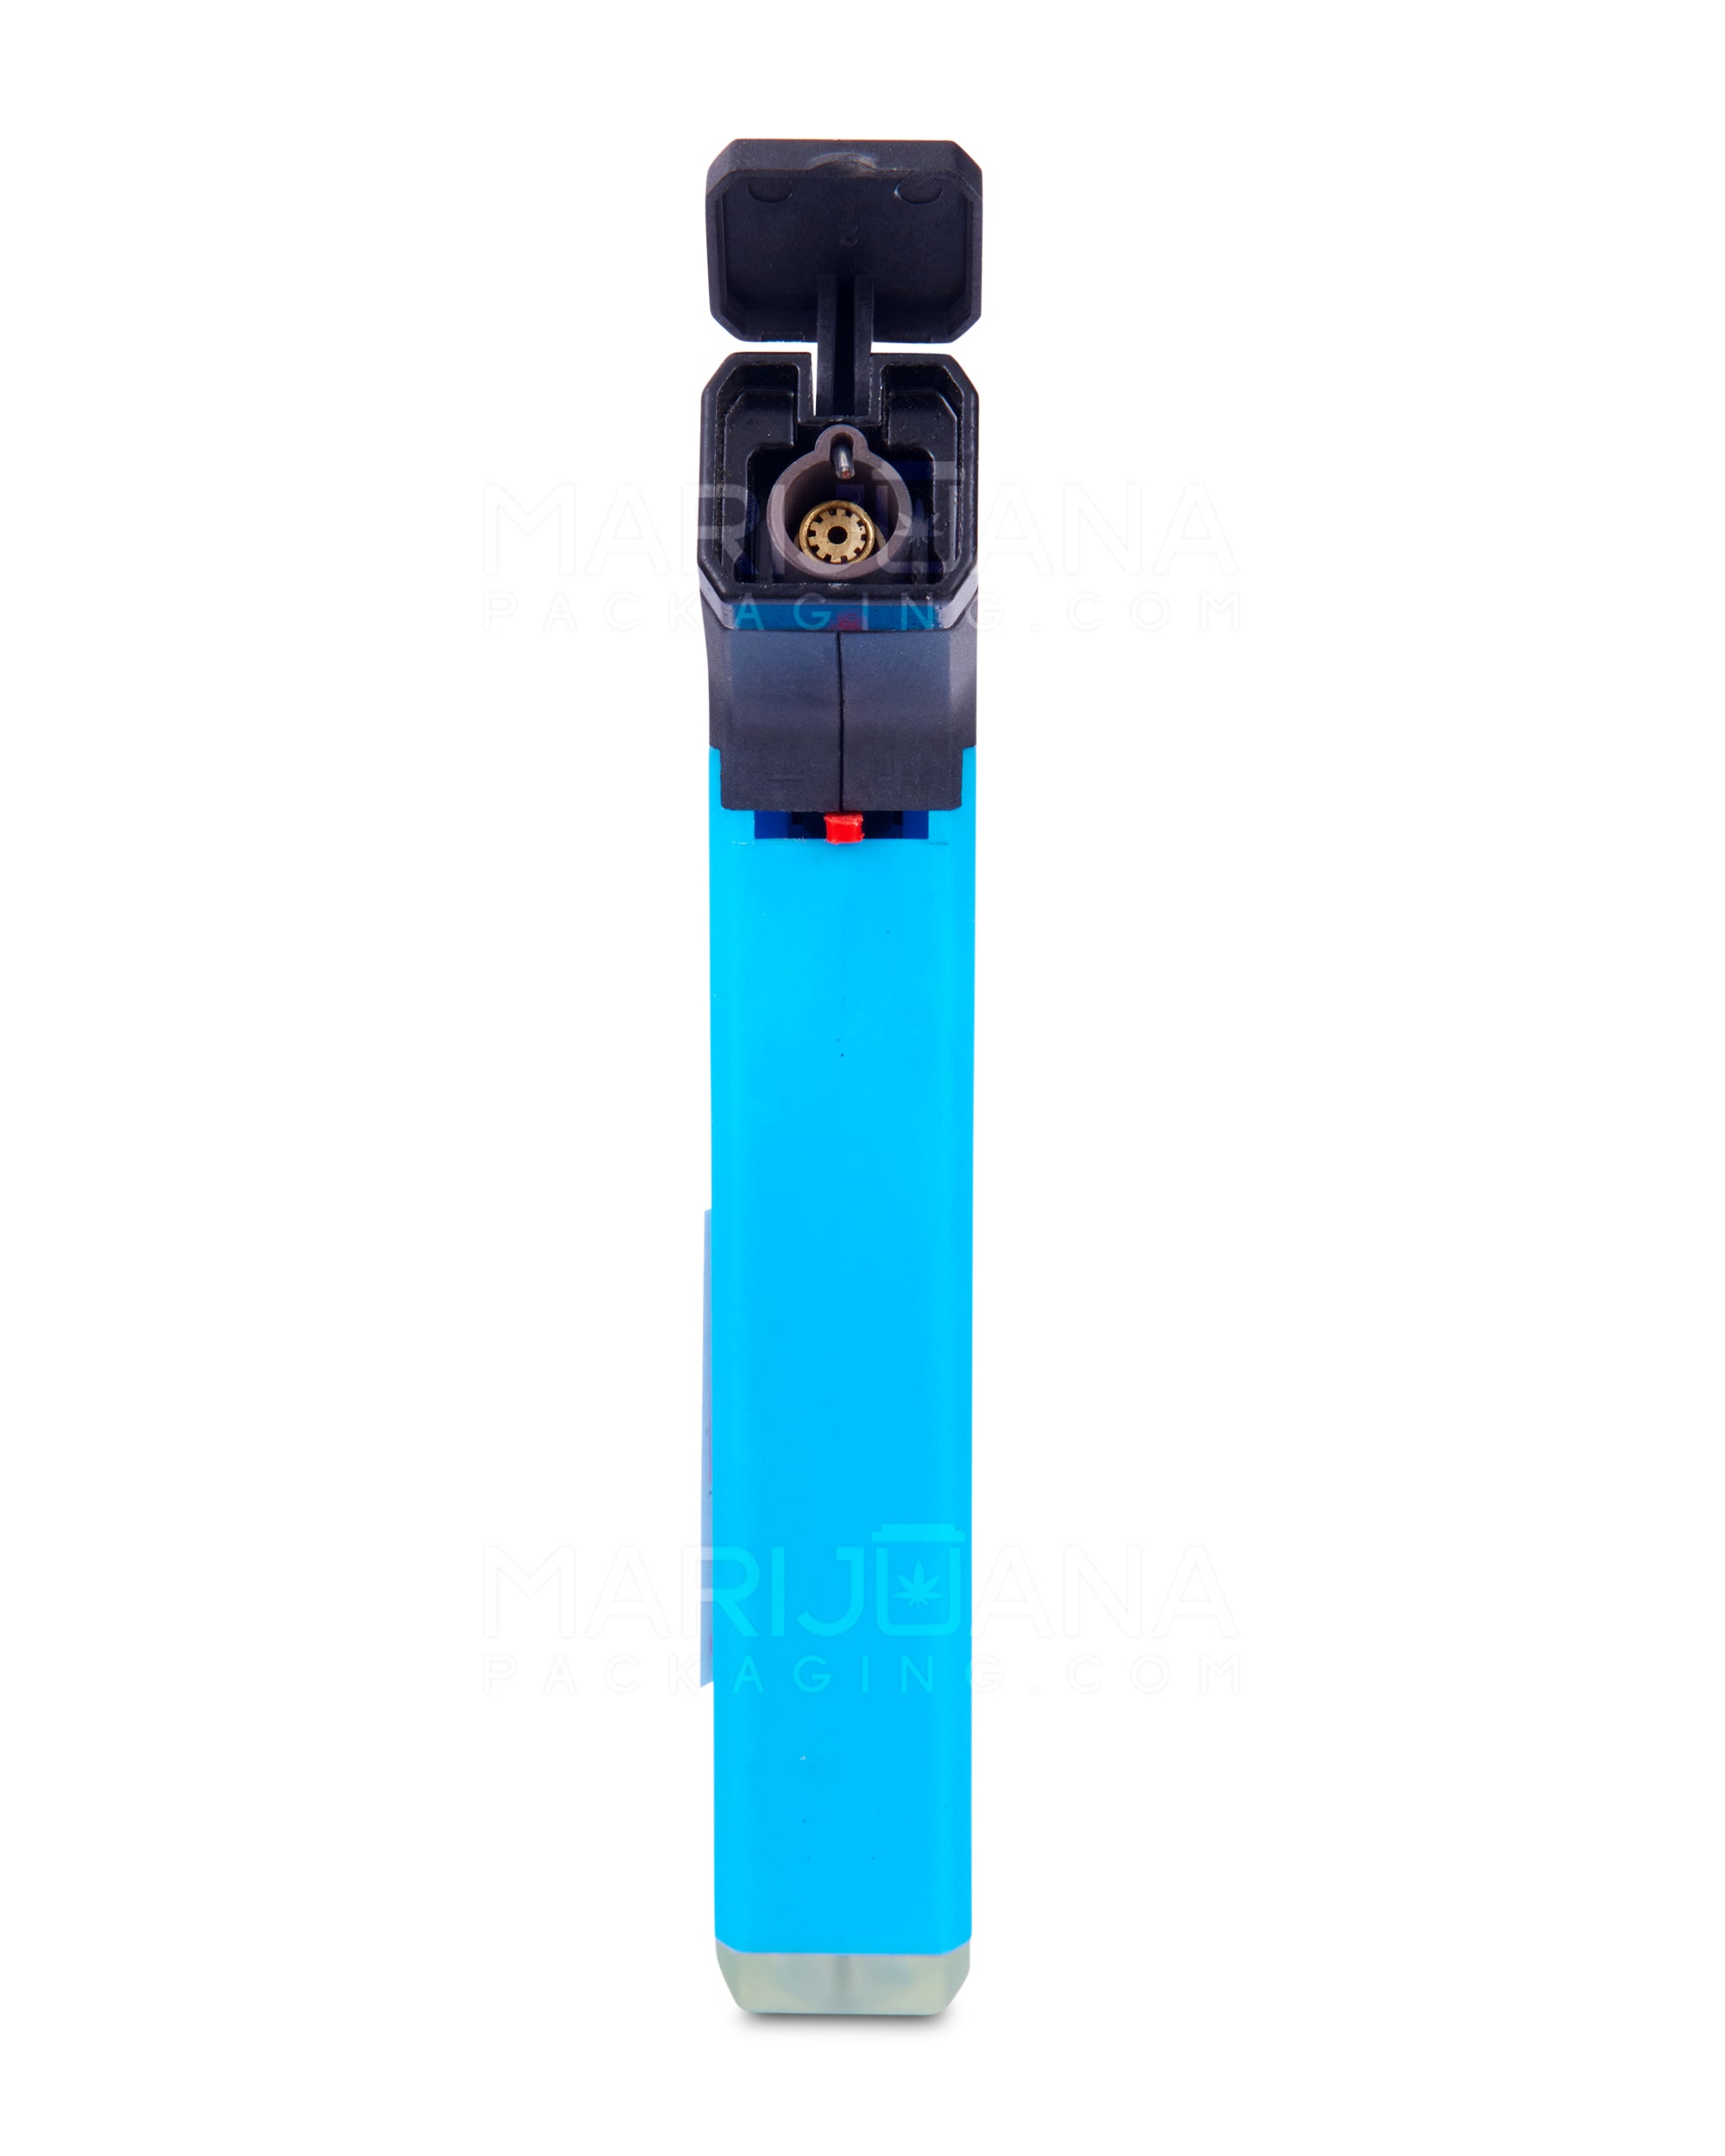 NEWPORT | 'Retail Display' Zero Assorted Neon Plastic Cigar Torch | 5in Tall - Butane - 12 Count - 5